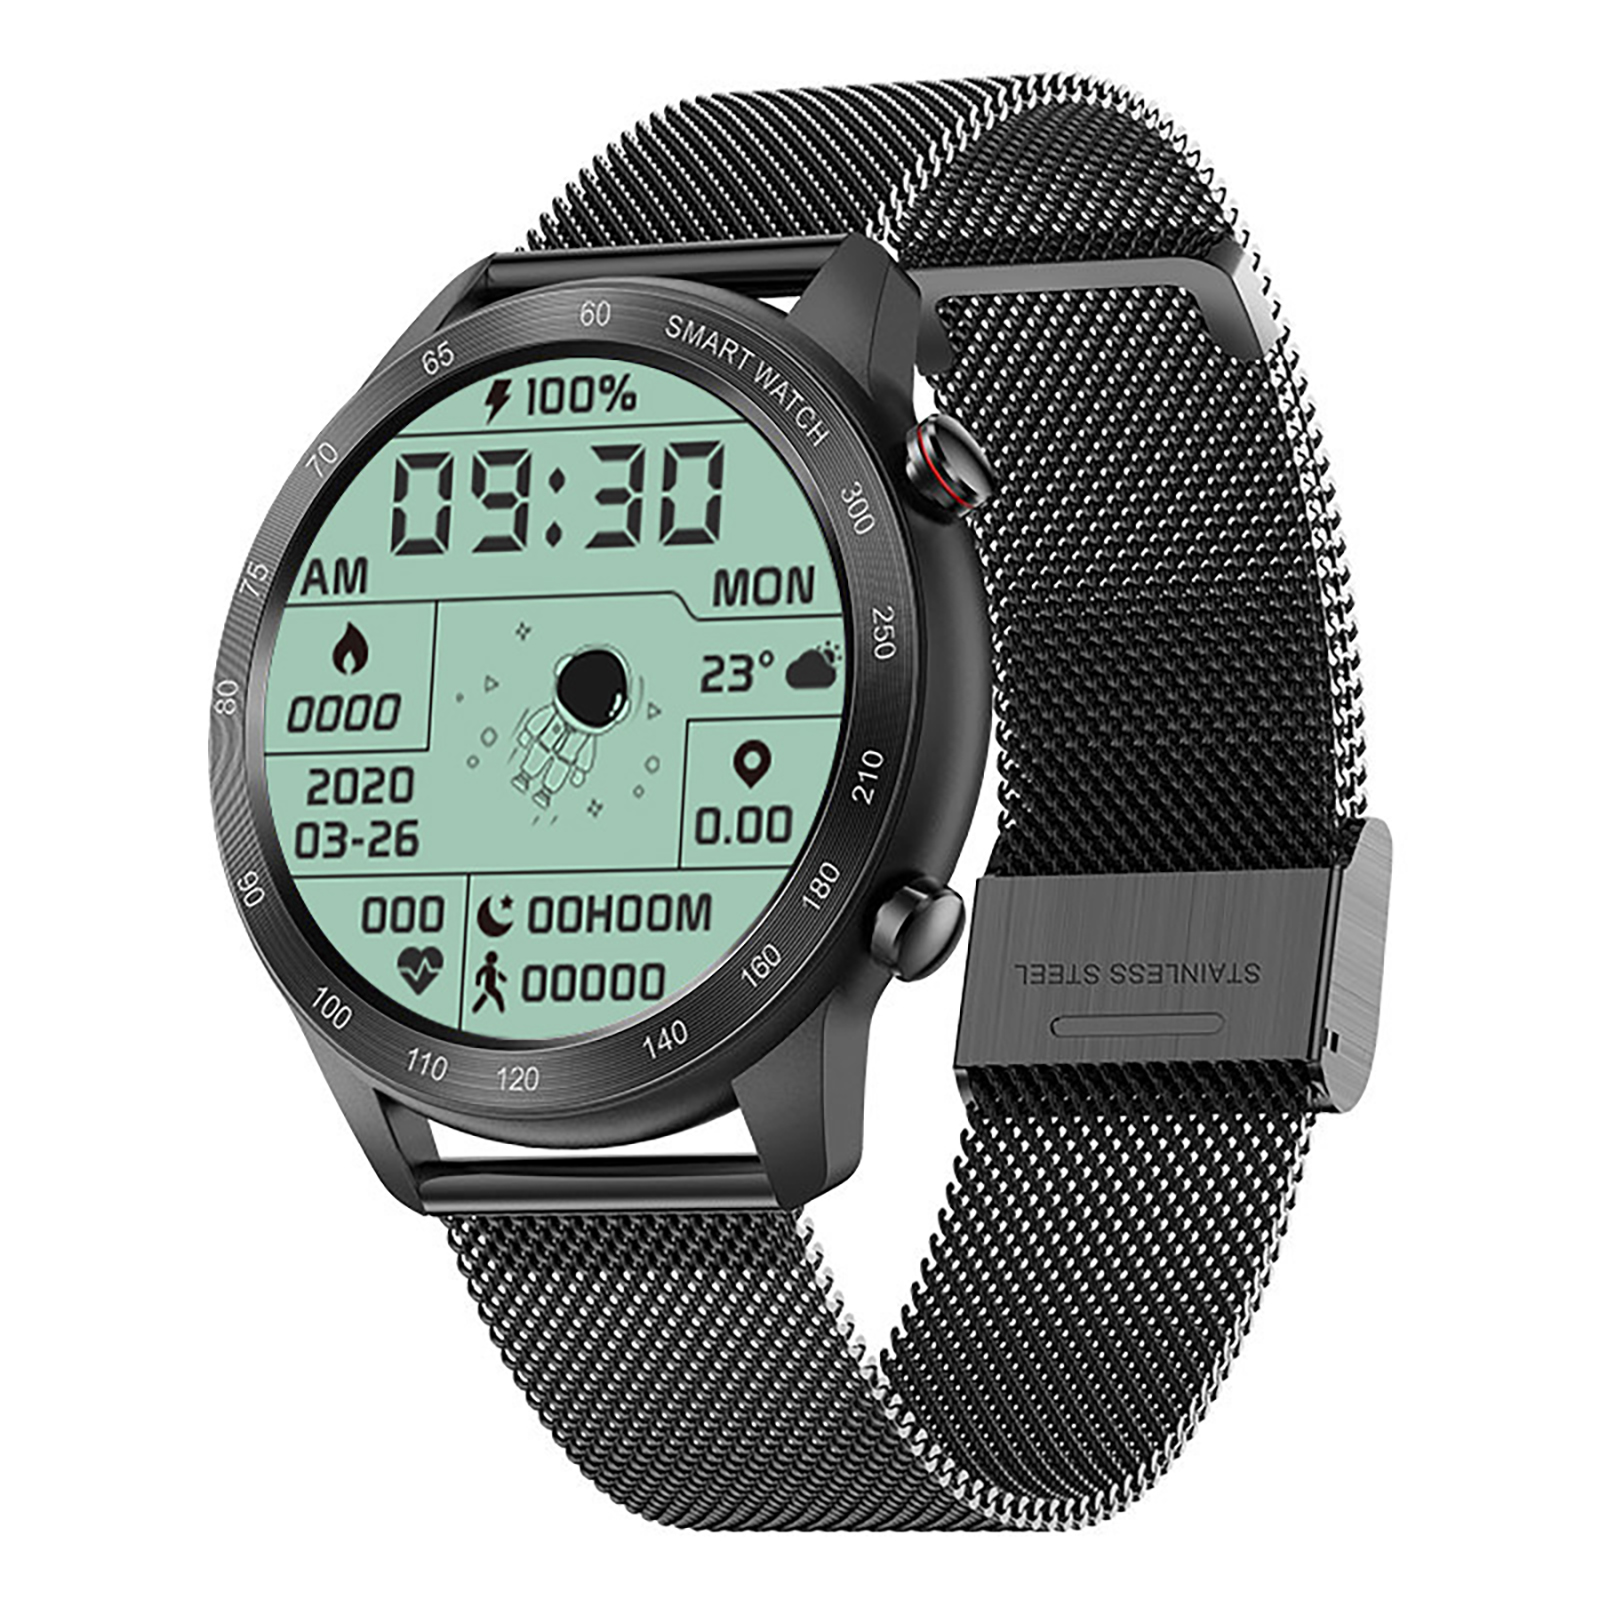 ZEBLAZE Mx5 Smart Watch Bluetooth Call Music Playback Waterproof Bracelet